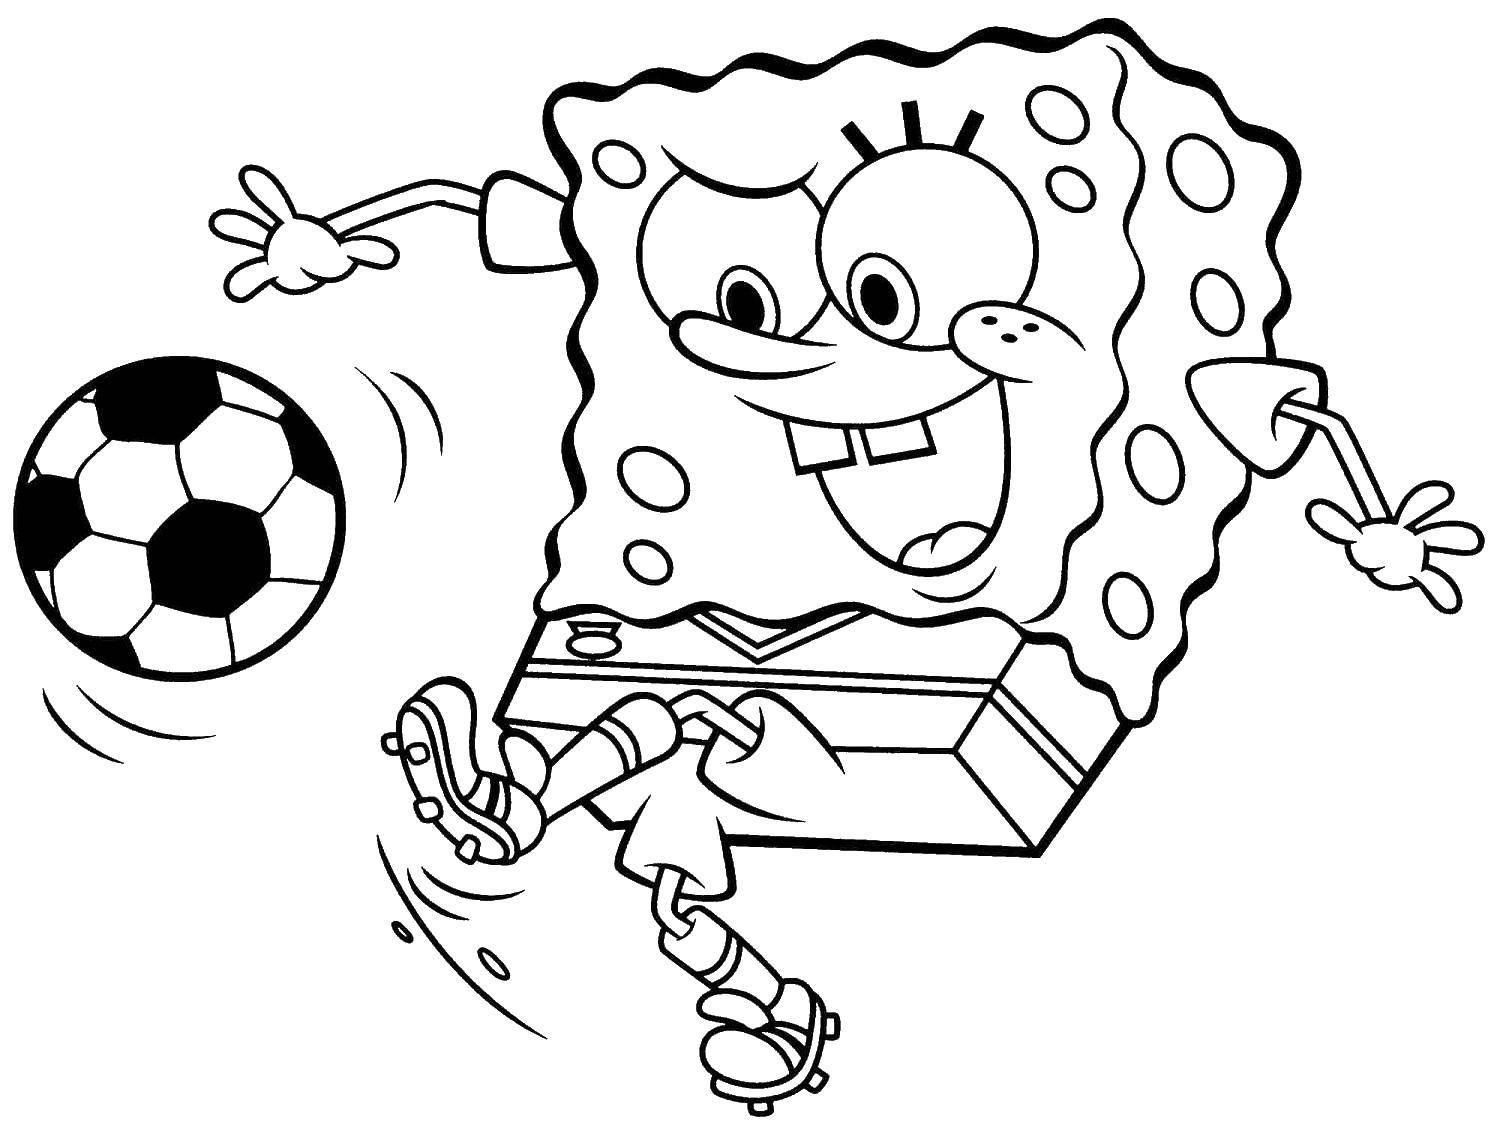 Coloring Spongebob Squarepants play ball. Category Spongebob. Tags:  spongebob Squarepants, the ball.